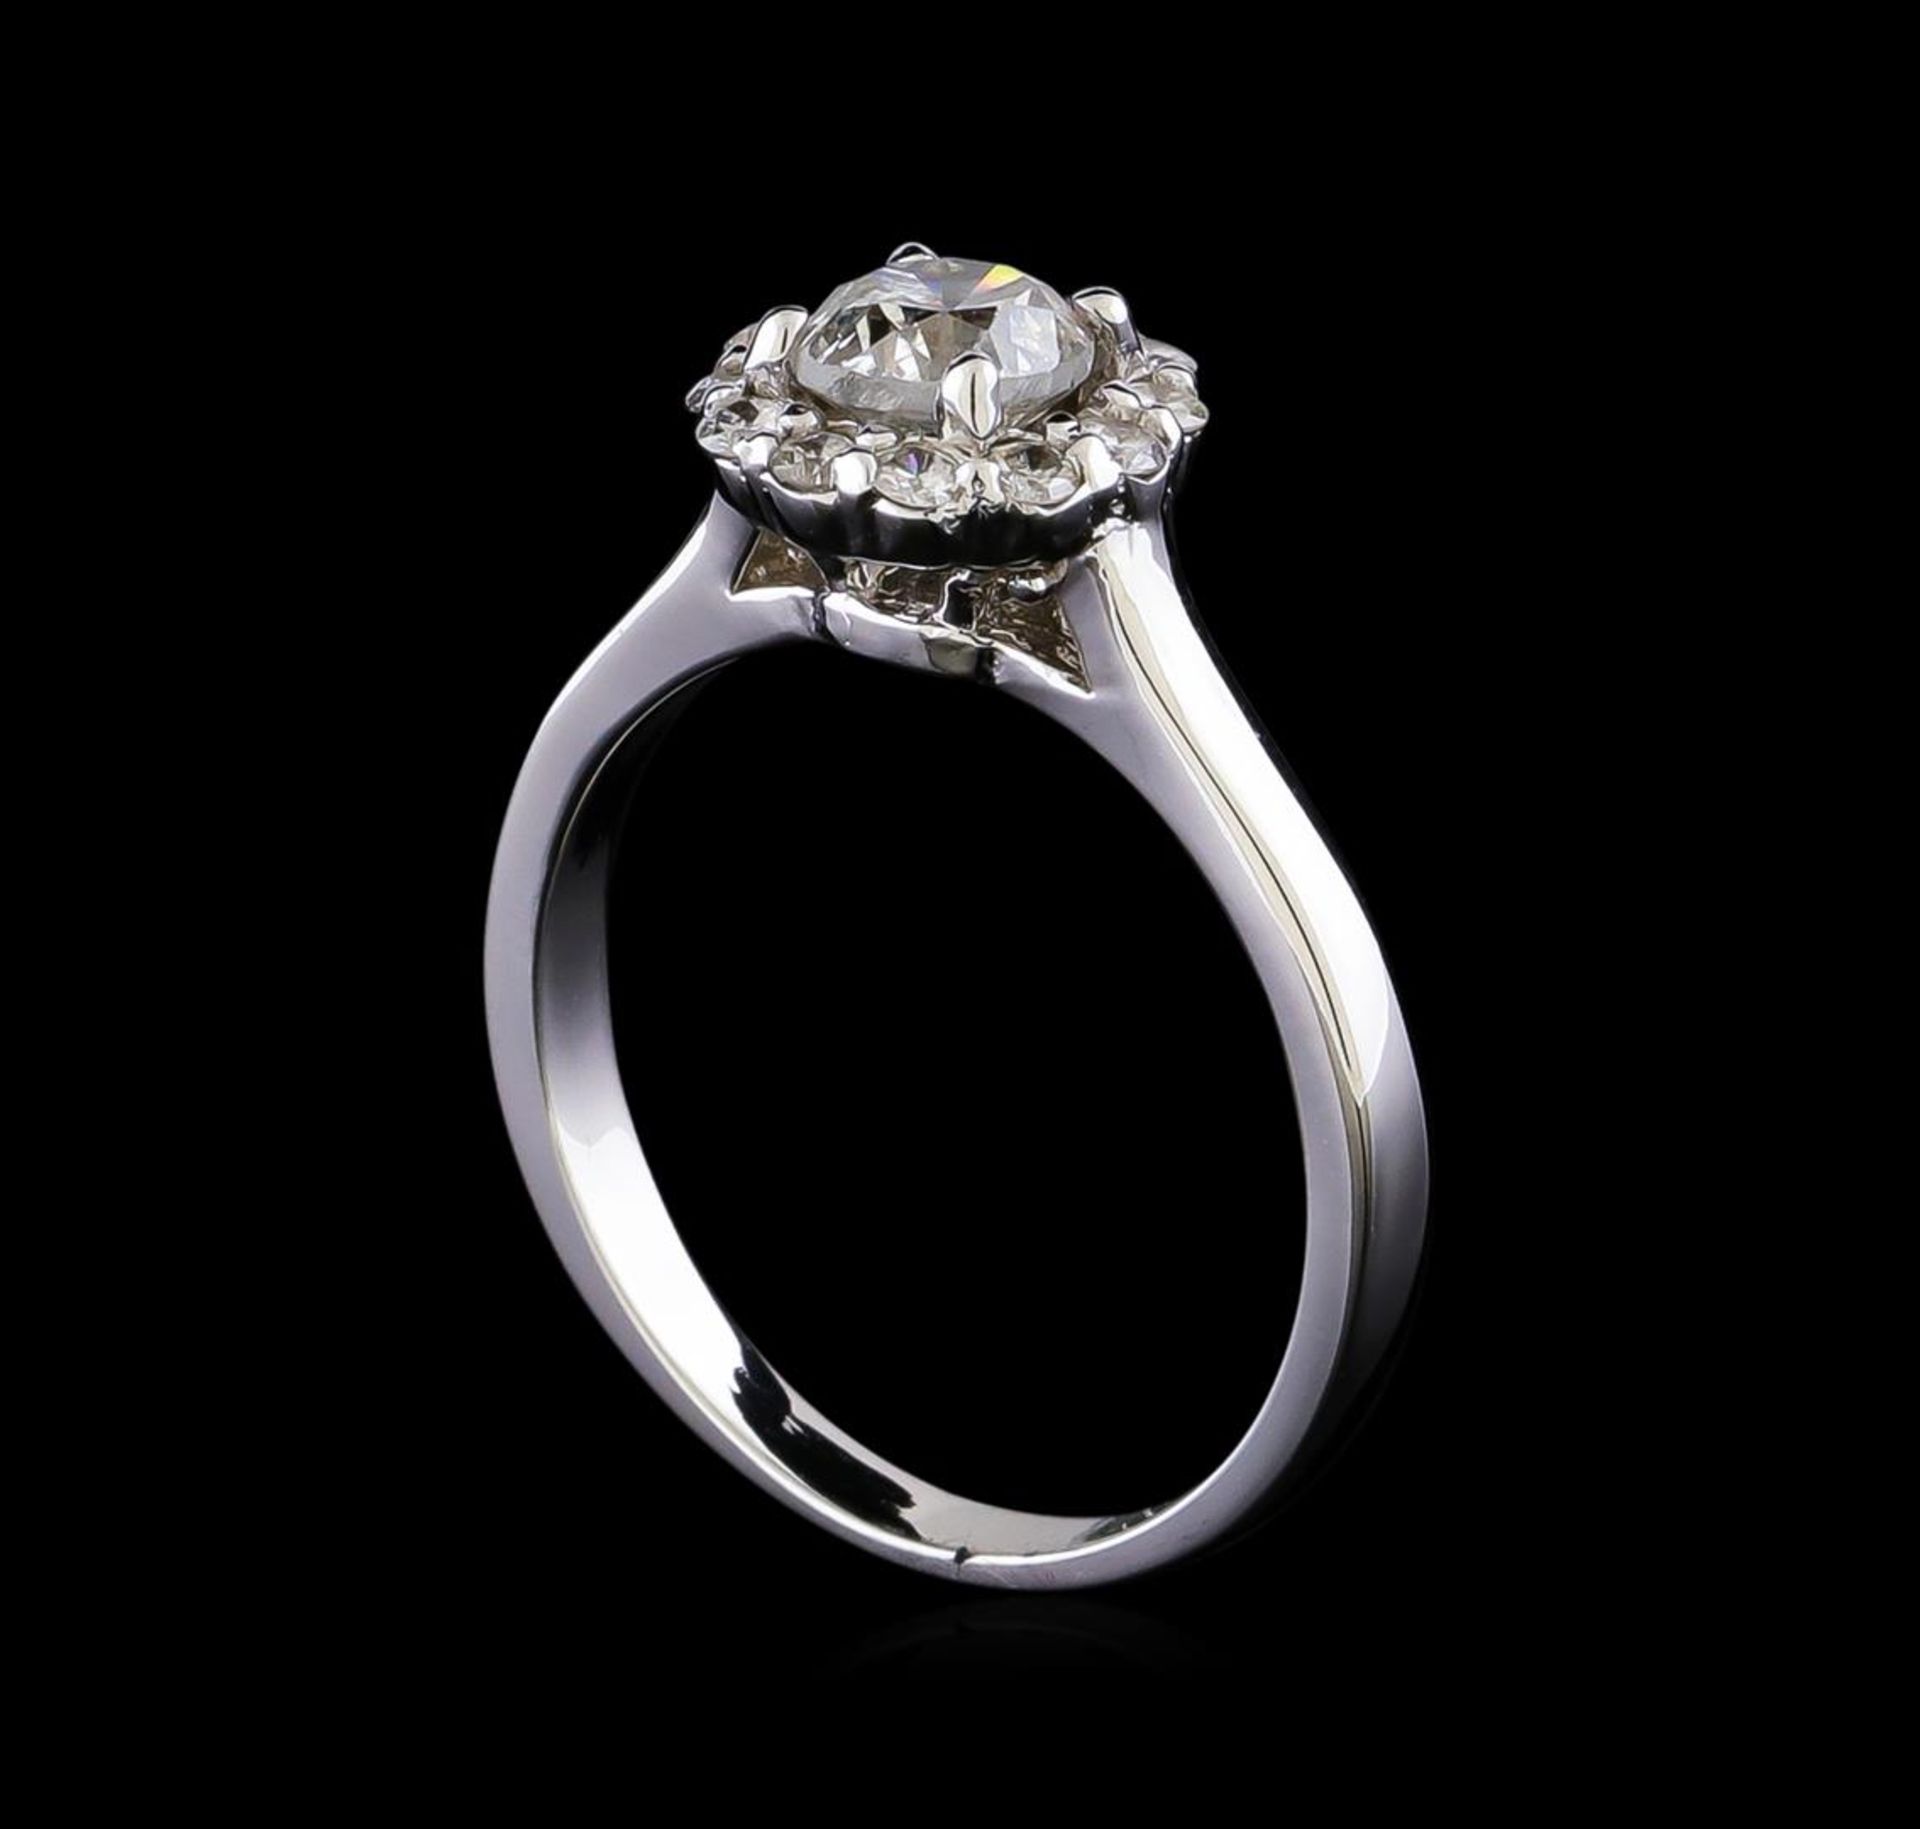 0.99 ctw Diamond Ring - 14KT White Gold - Image 4 of 5